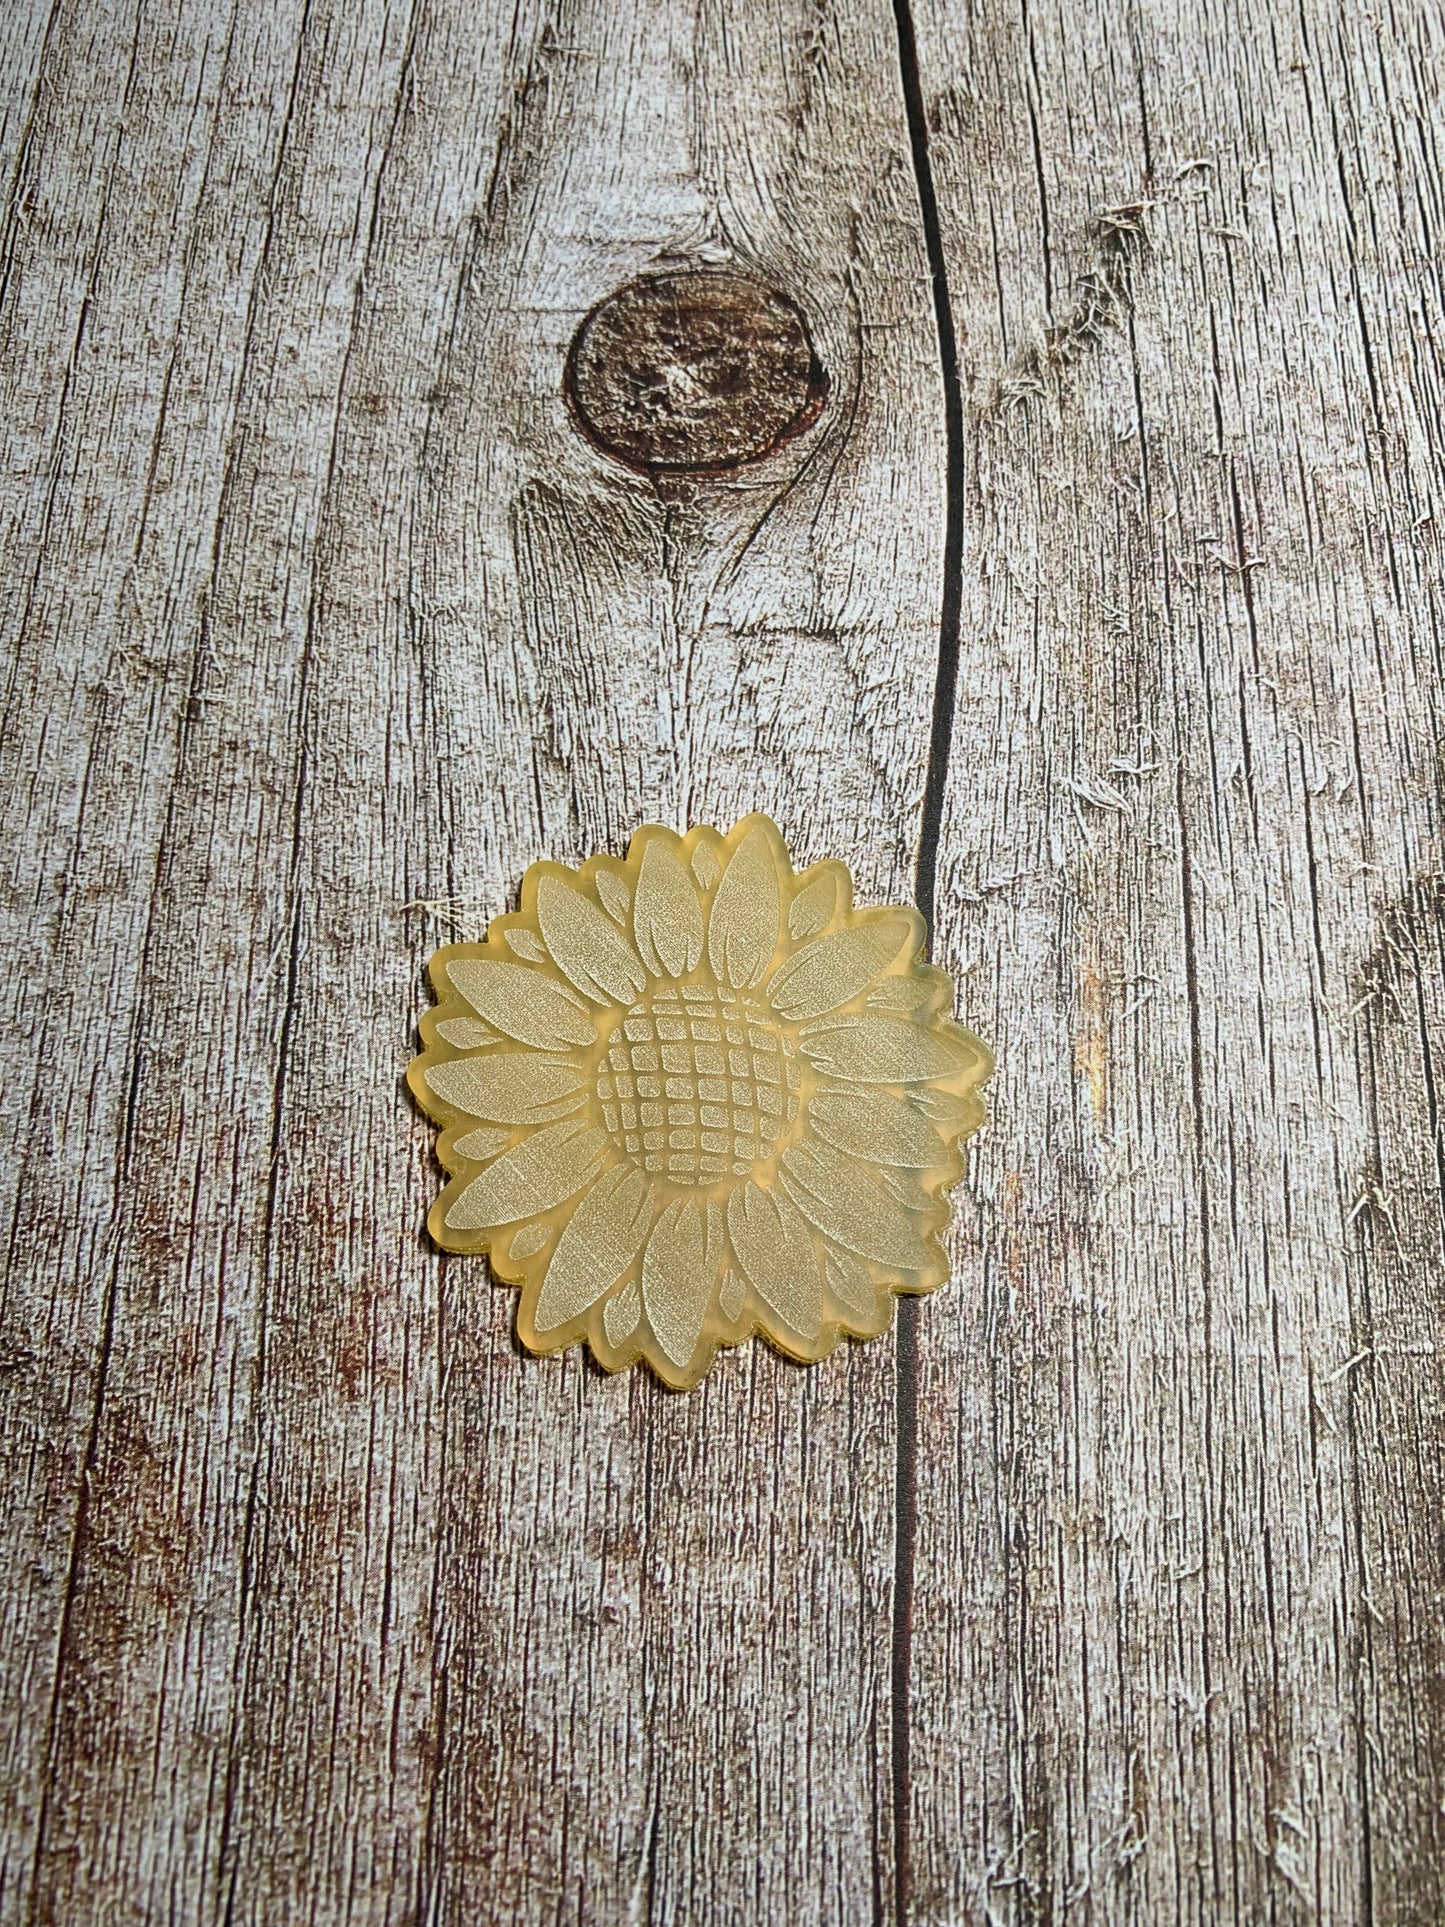 Sunflower - engraved - Creative Designs By Kari